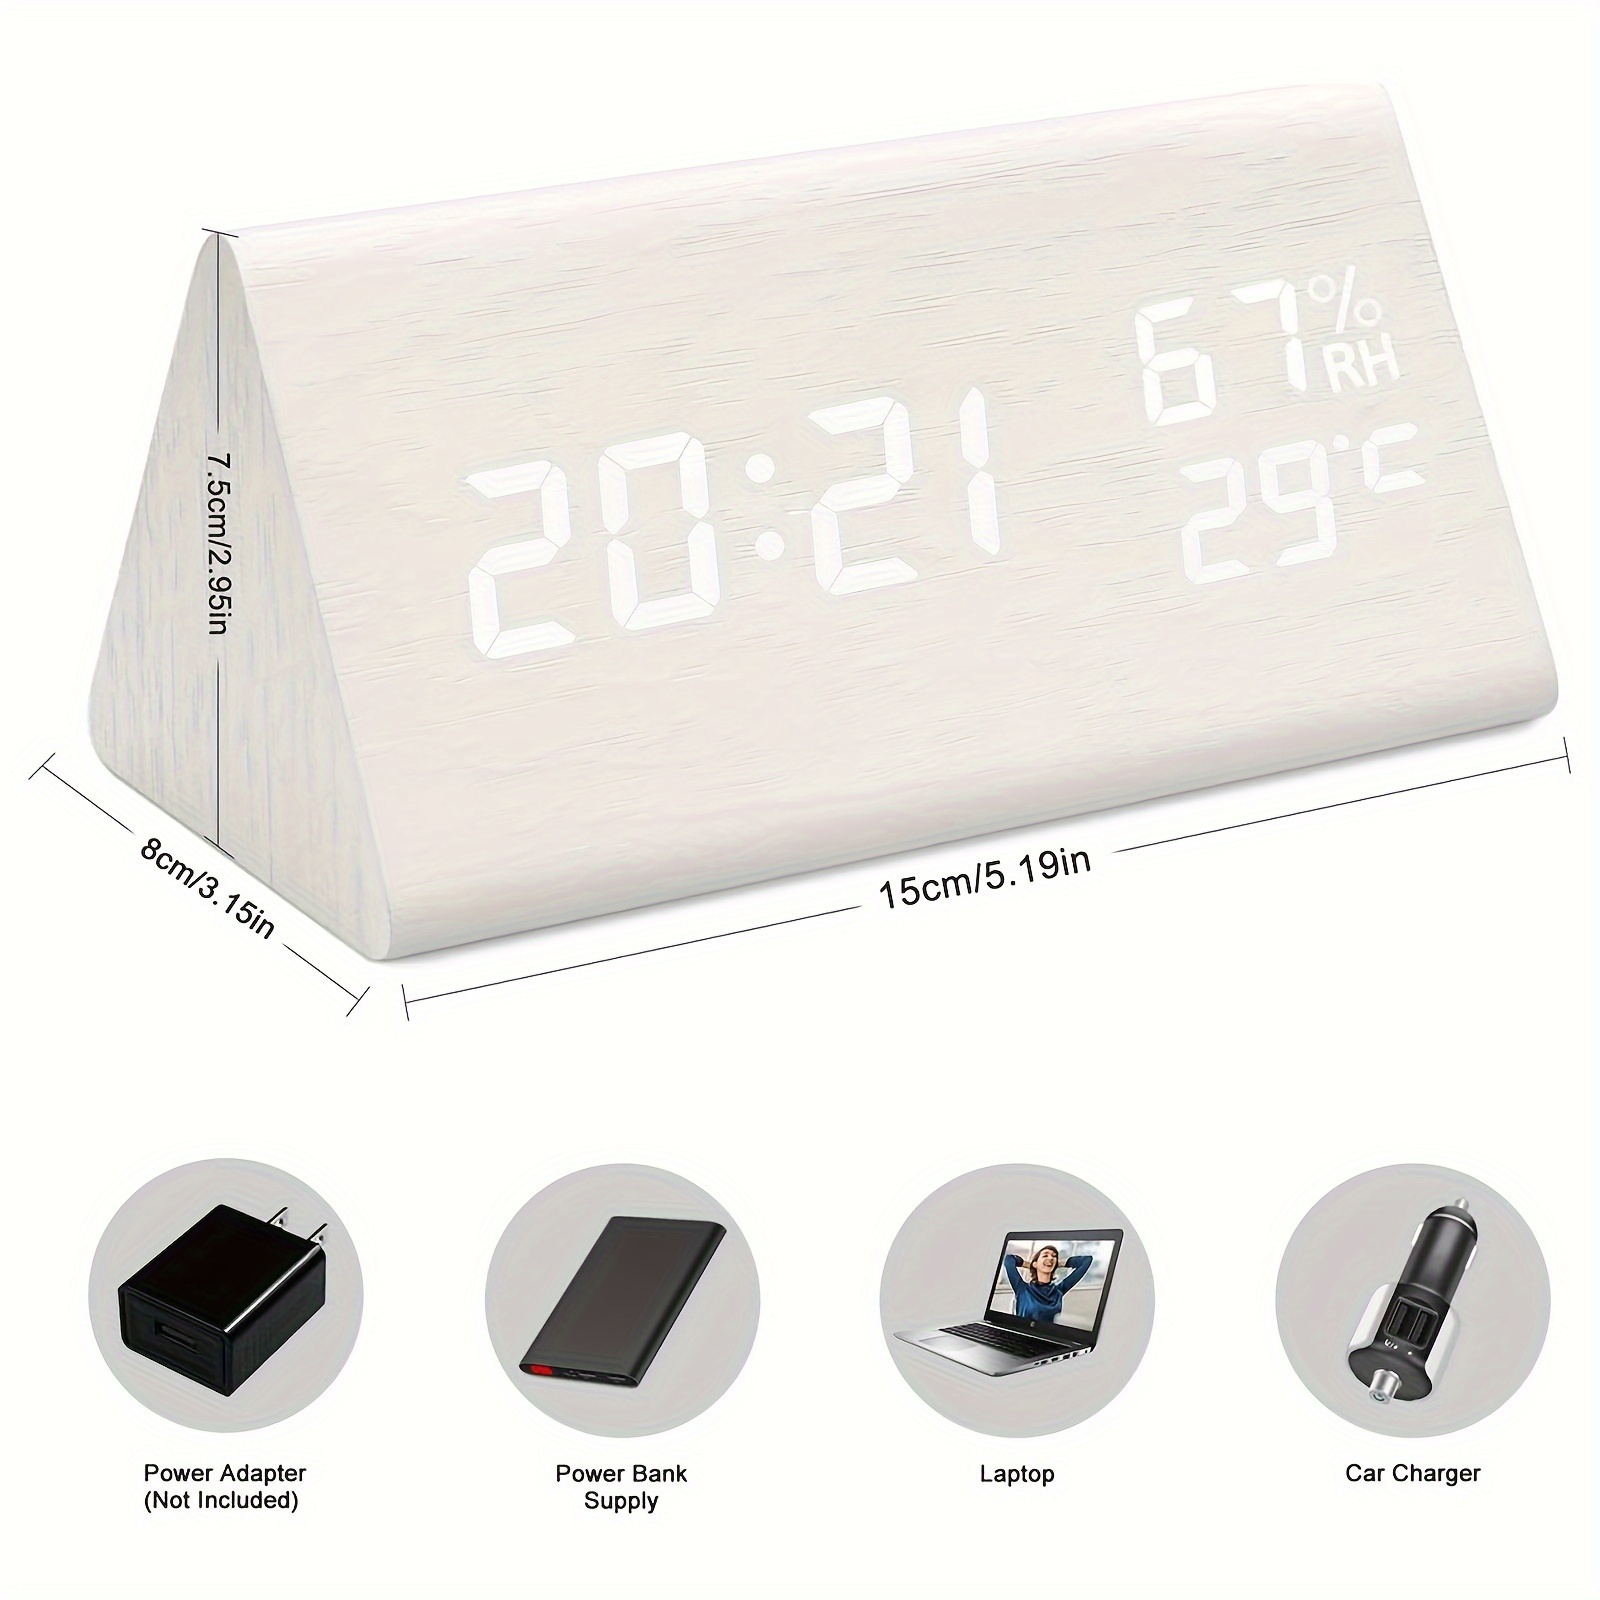 Reloj Digital 8cm Estilo Madera Alarma Despertador Fecha